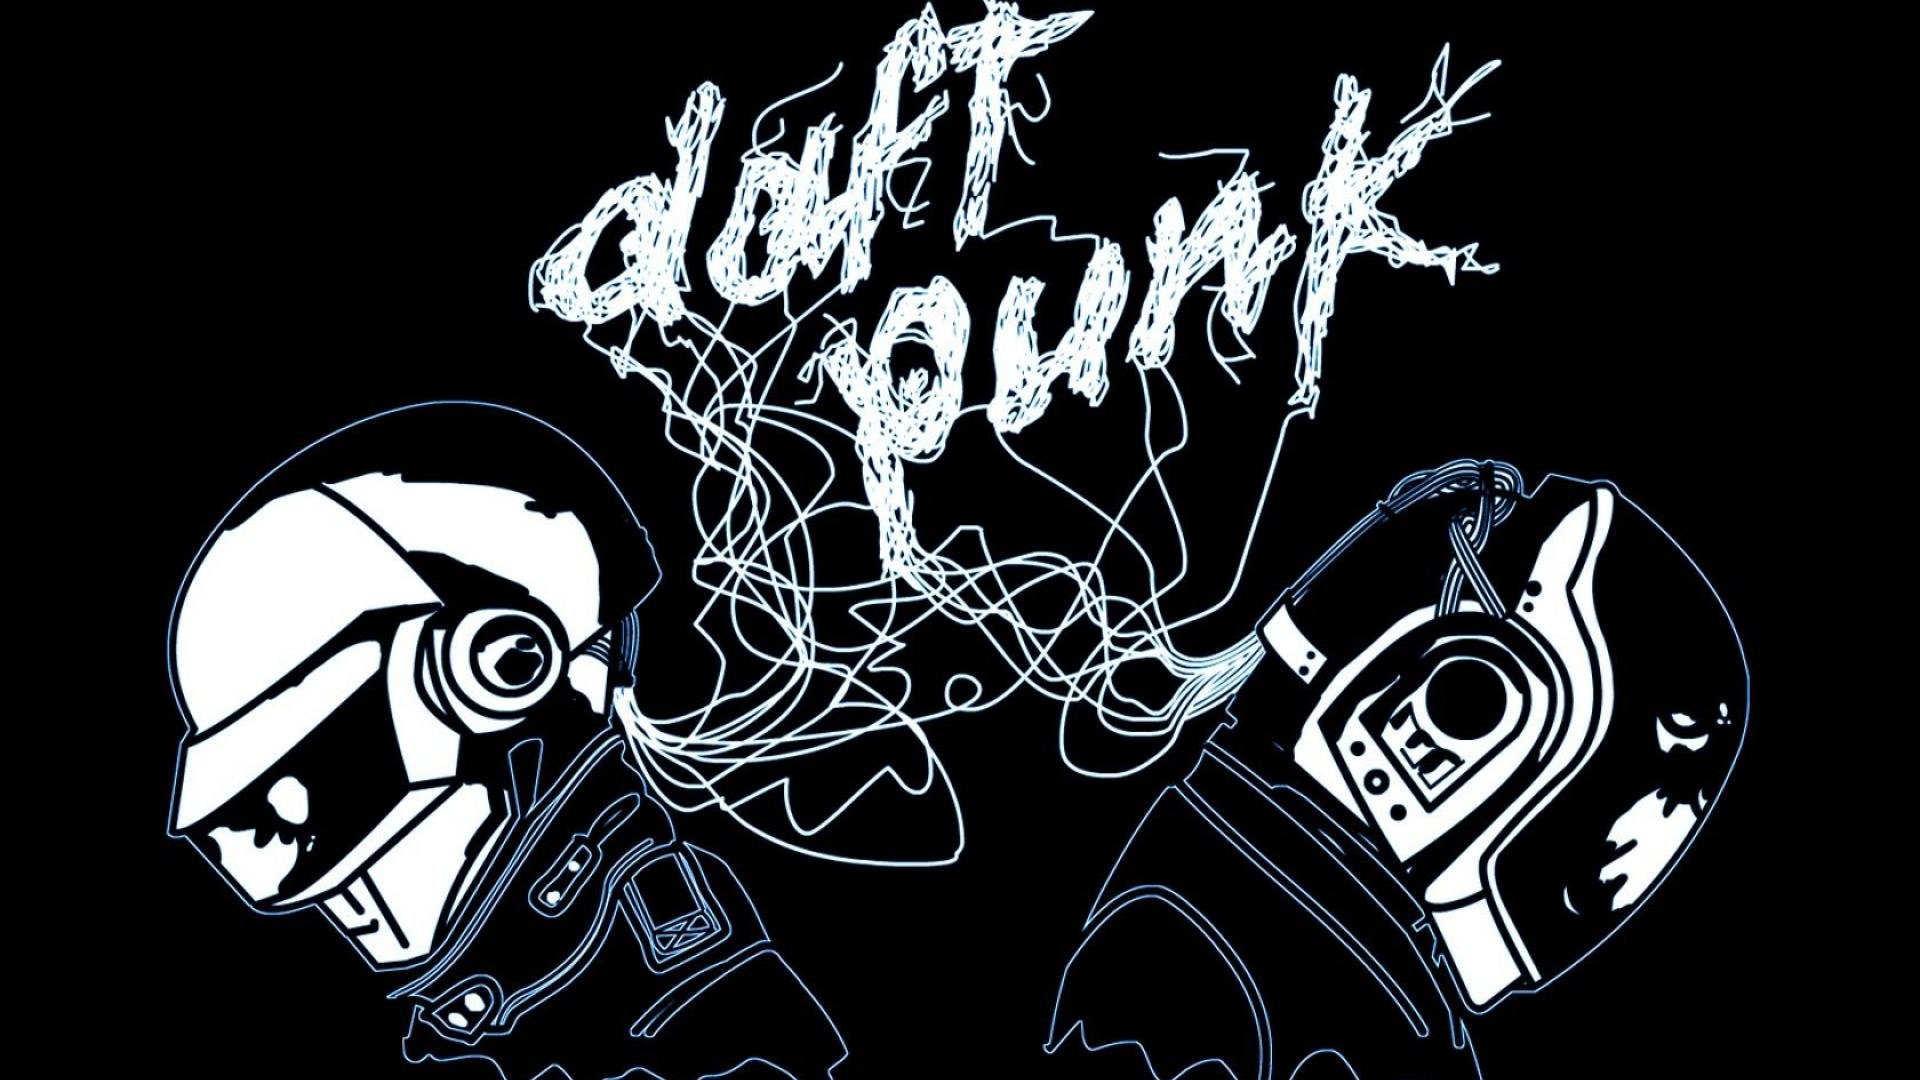 daft, Punk, Dubstep, Electro, House, Dance, Disco, Electronic, Robot, Cyborg, Poster Wallpaper